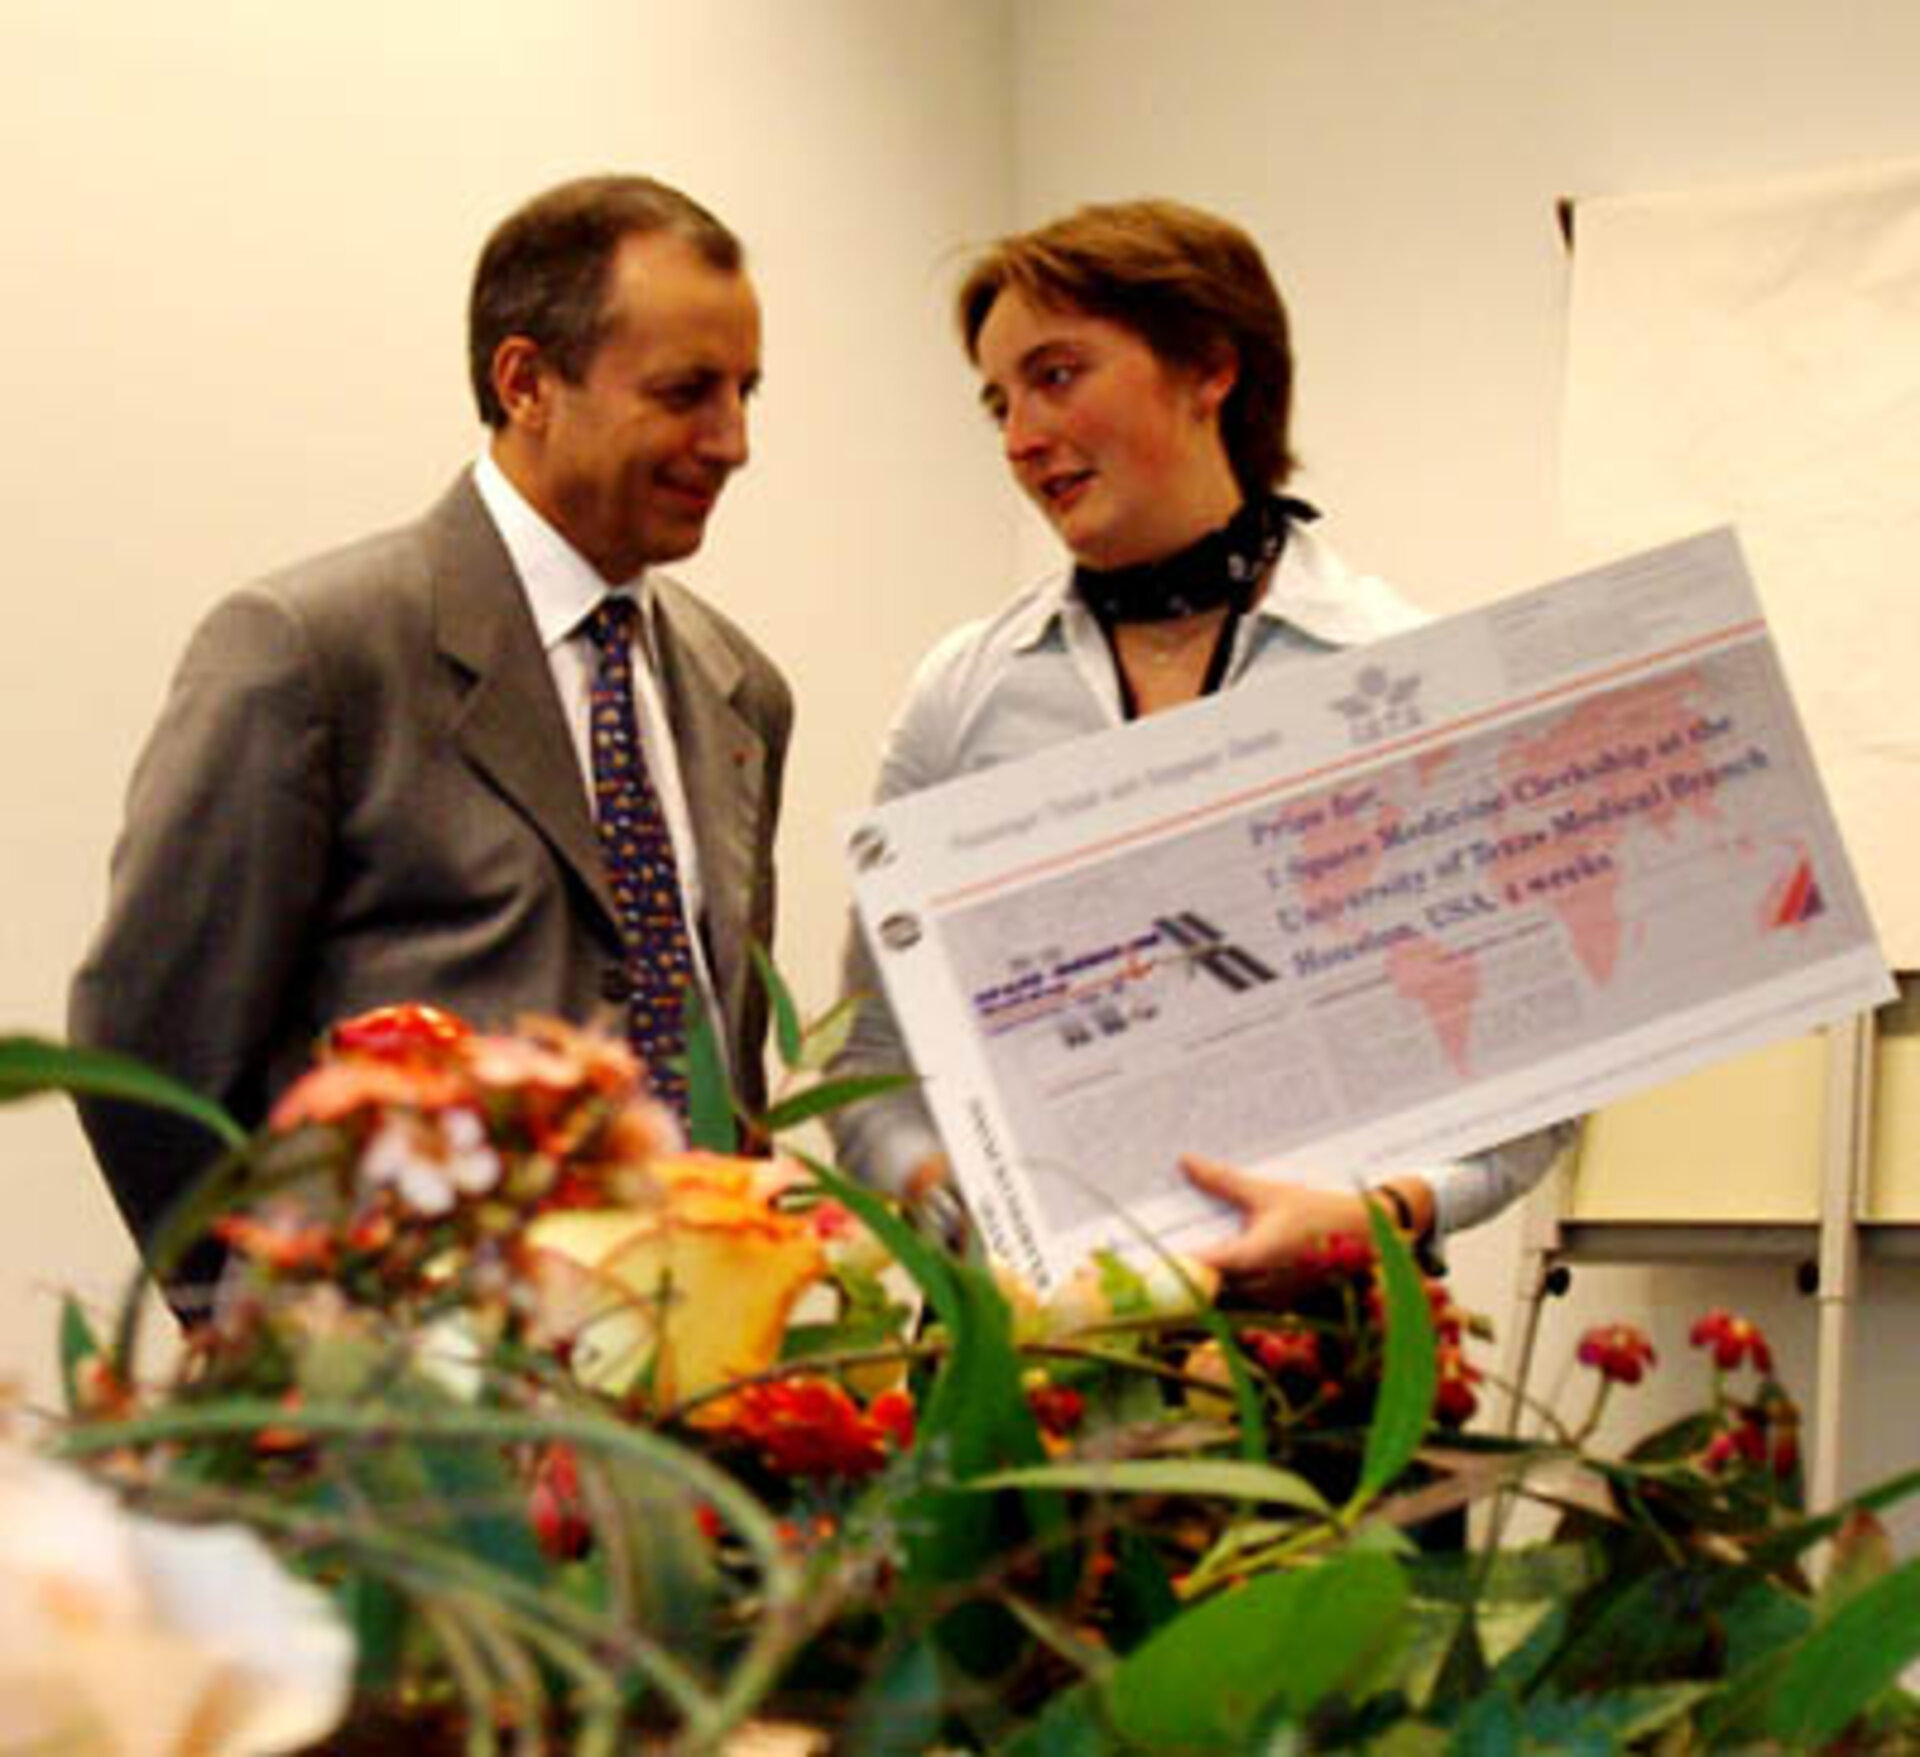 Michel Tognini presents Regina Egelhofer with her award